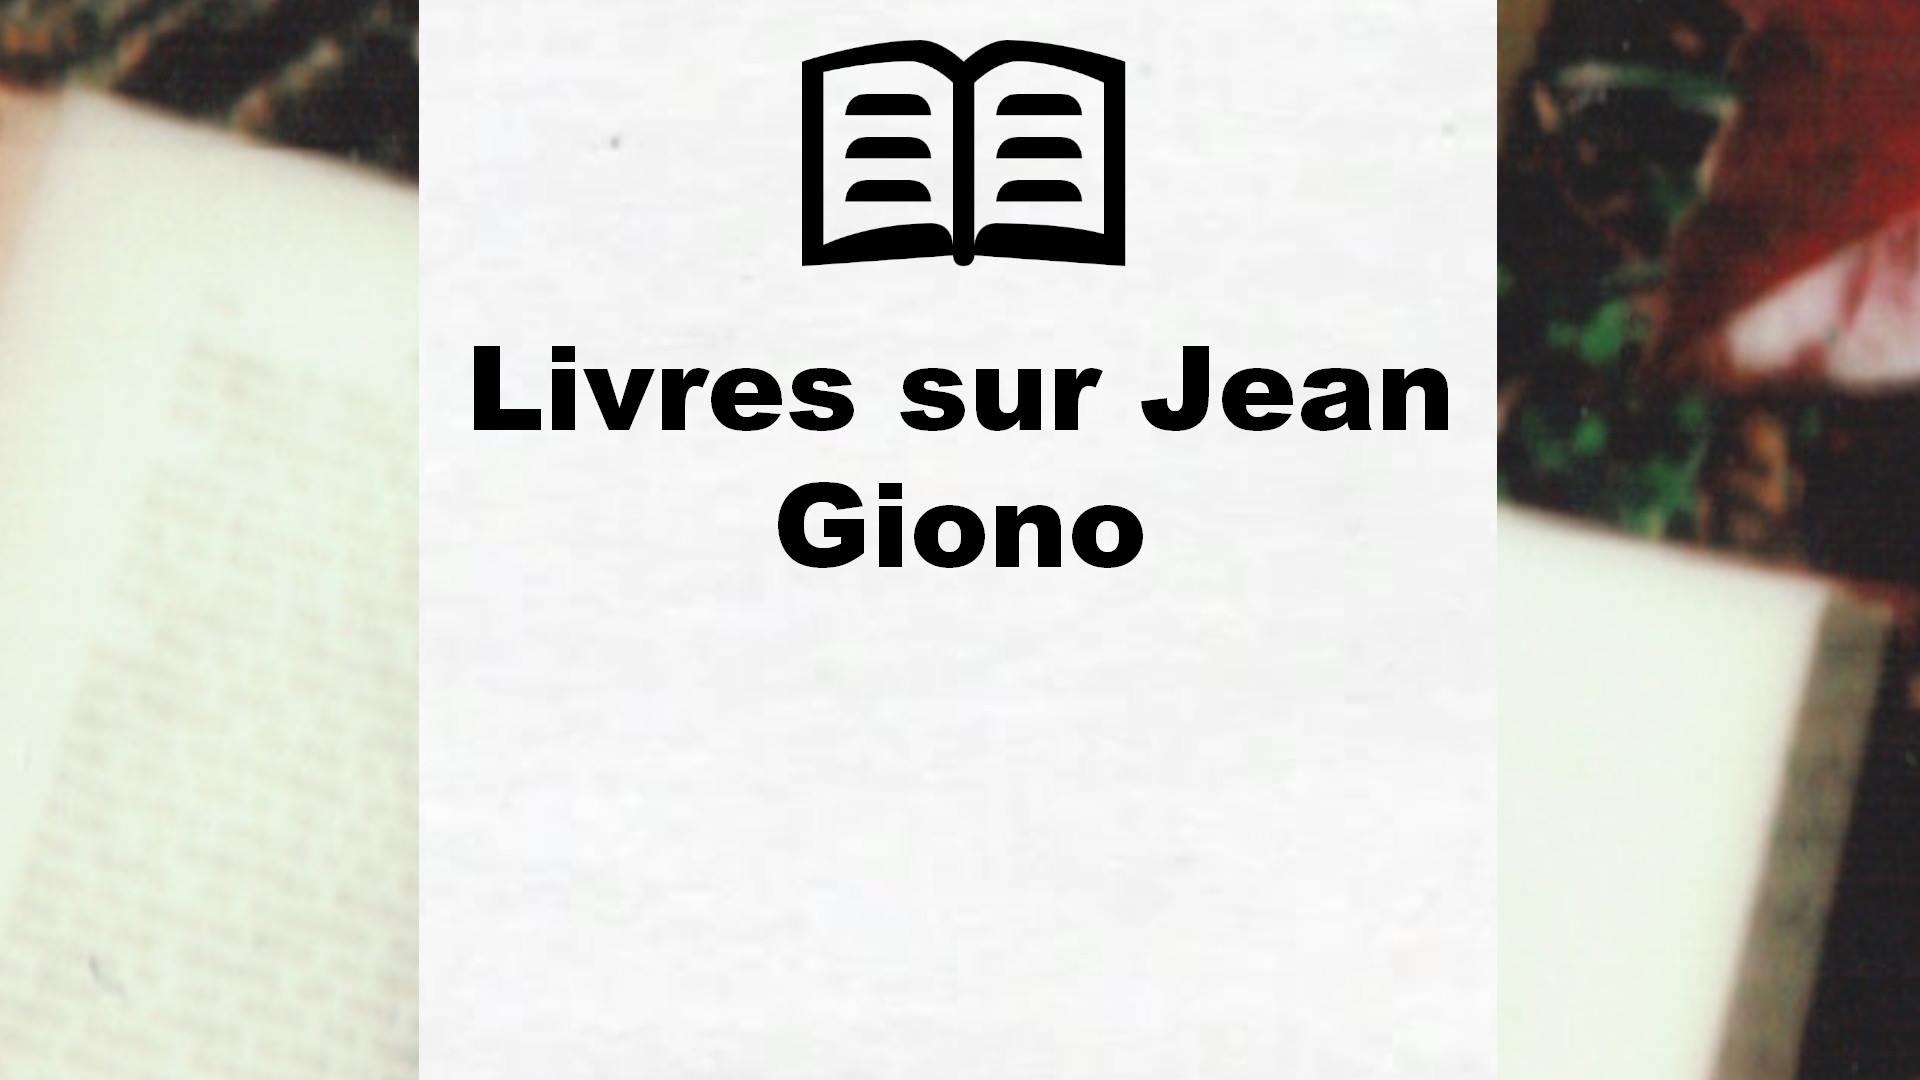 Livres sur Jean Giono